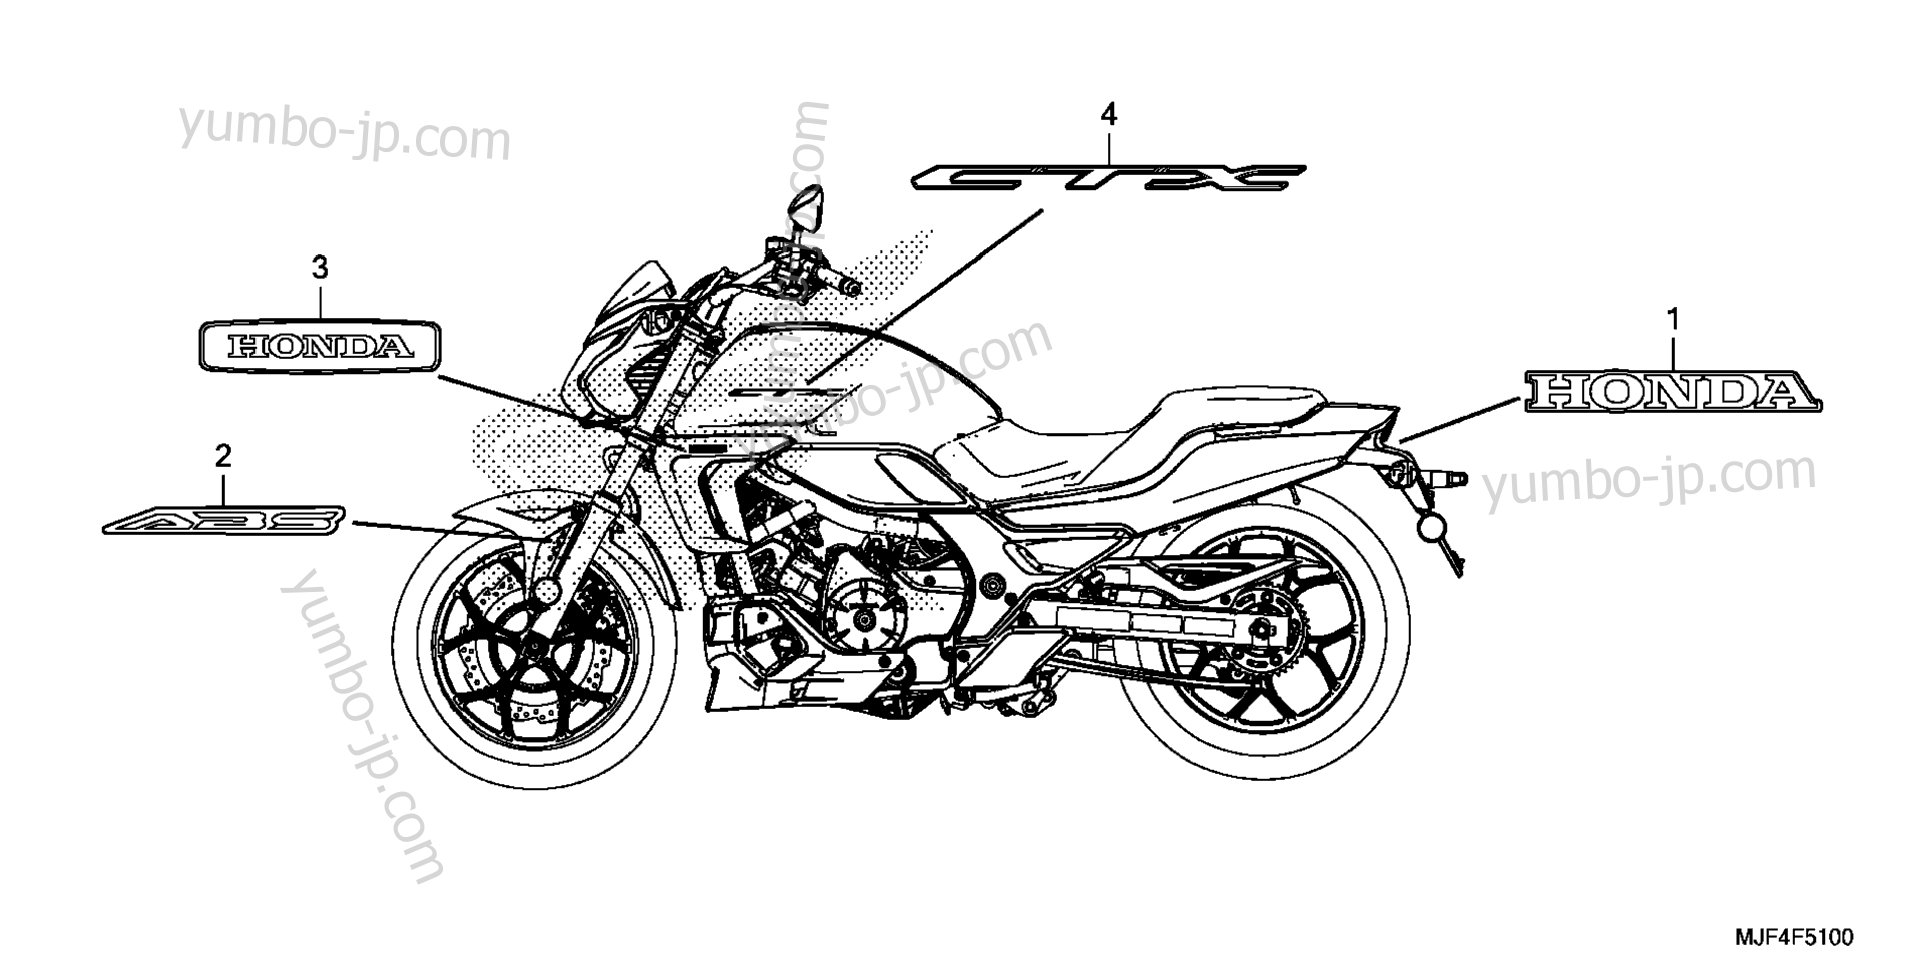 MARK / EMBLEM for motorcycles HONDA CTX700ND AC 2014 year